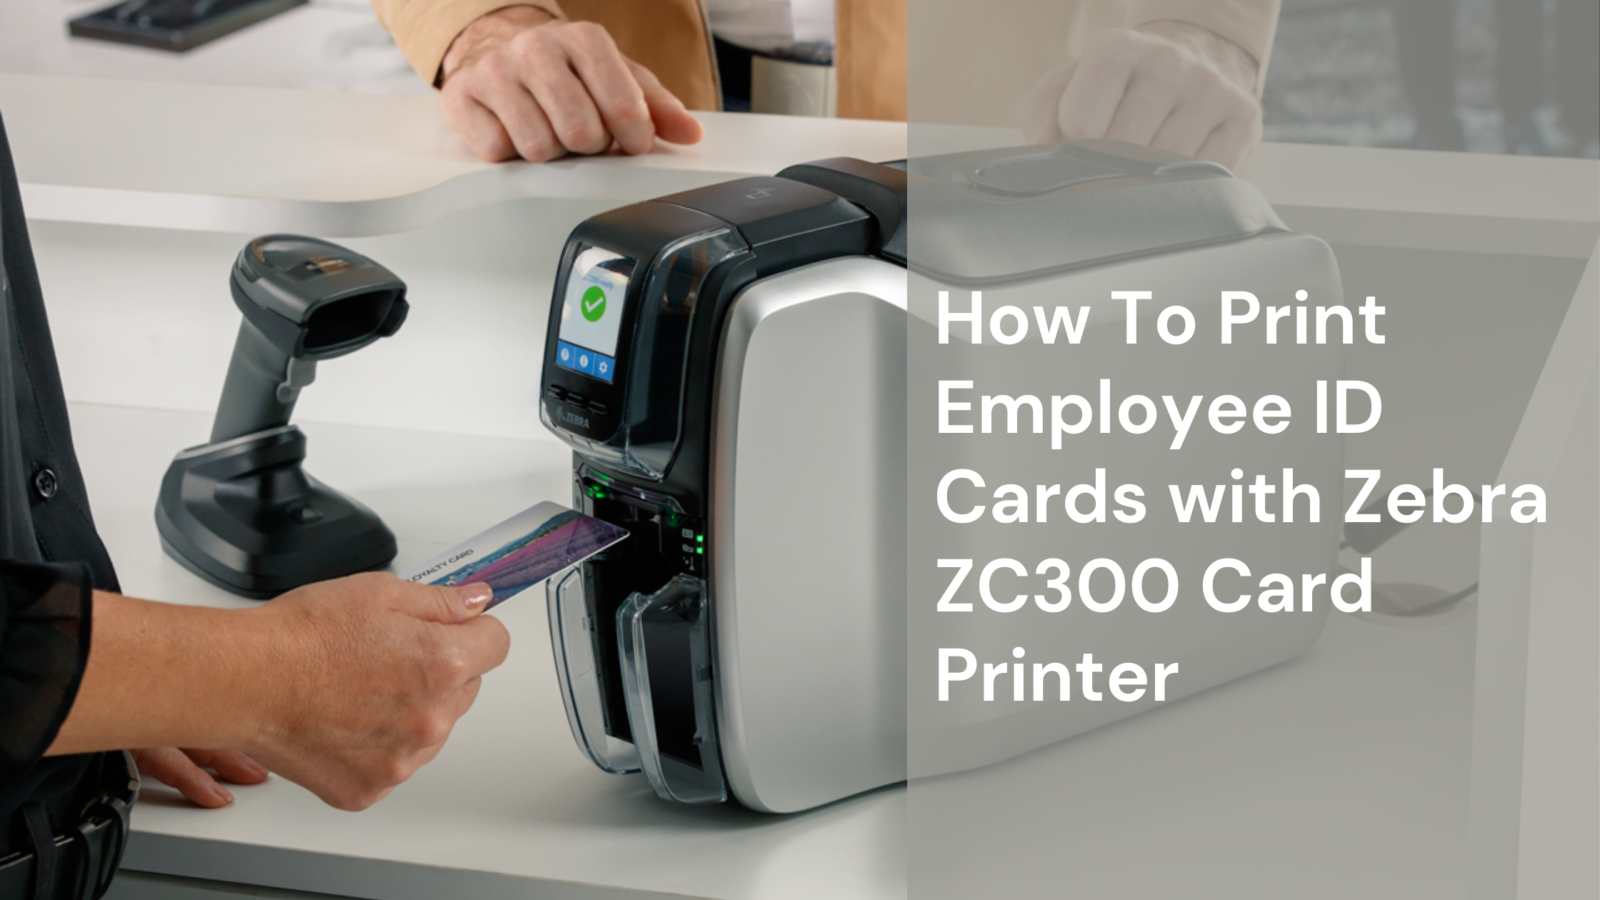 How to Print Employee ID Cards with Zebra ZC300